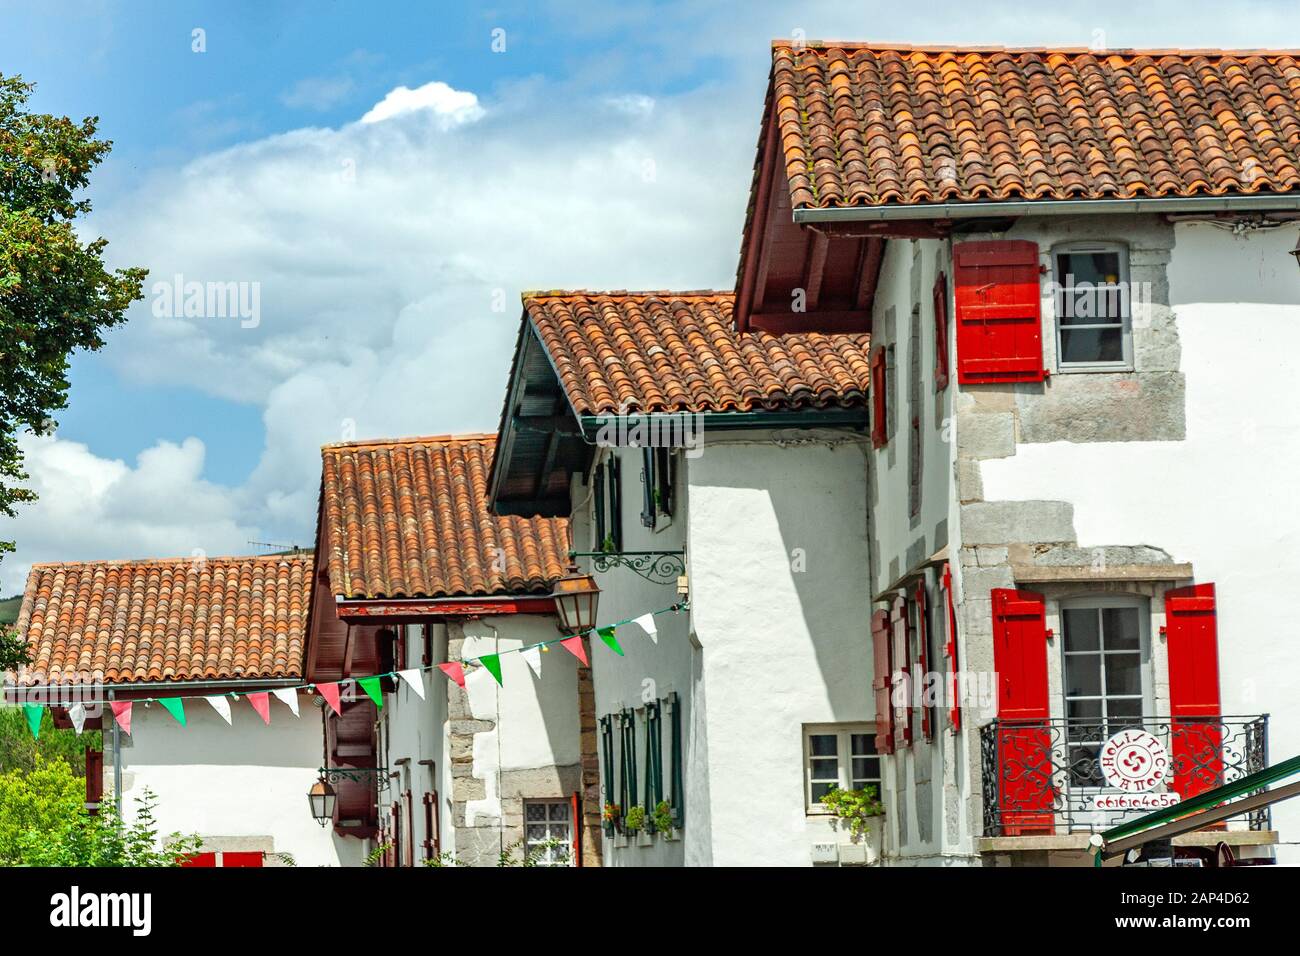 ainhoa, picturesque town, Basque Country Stock Photo